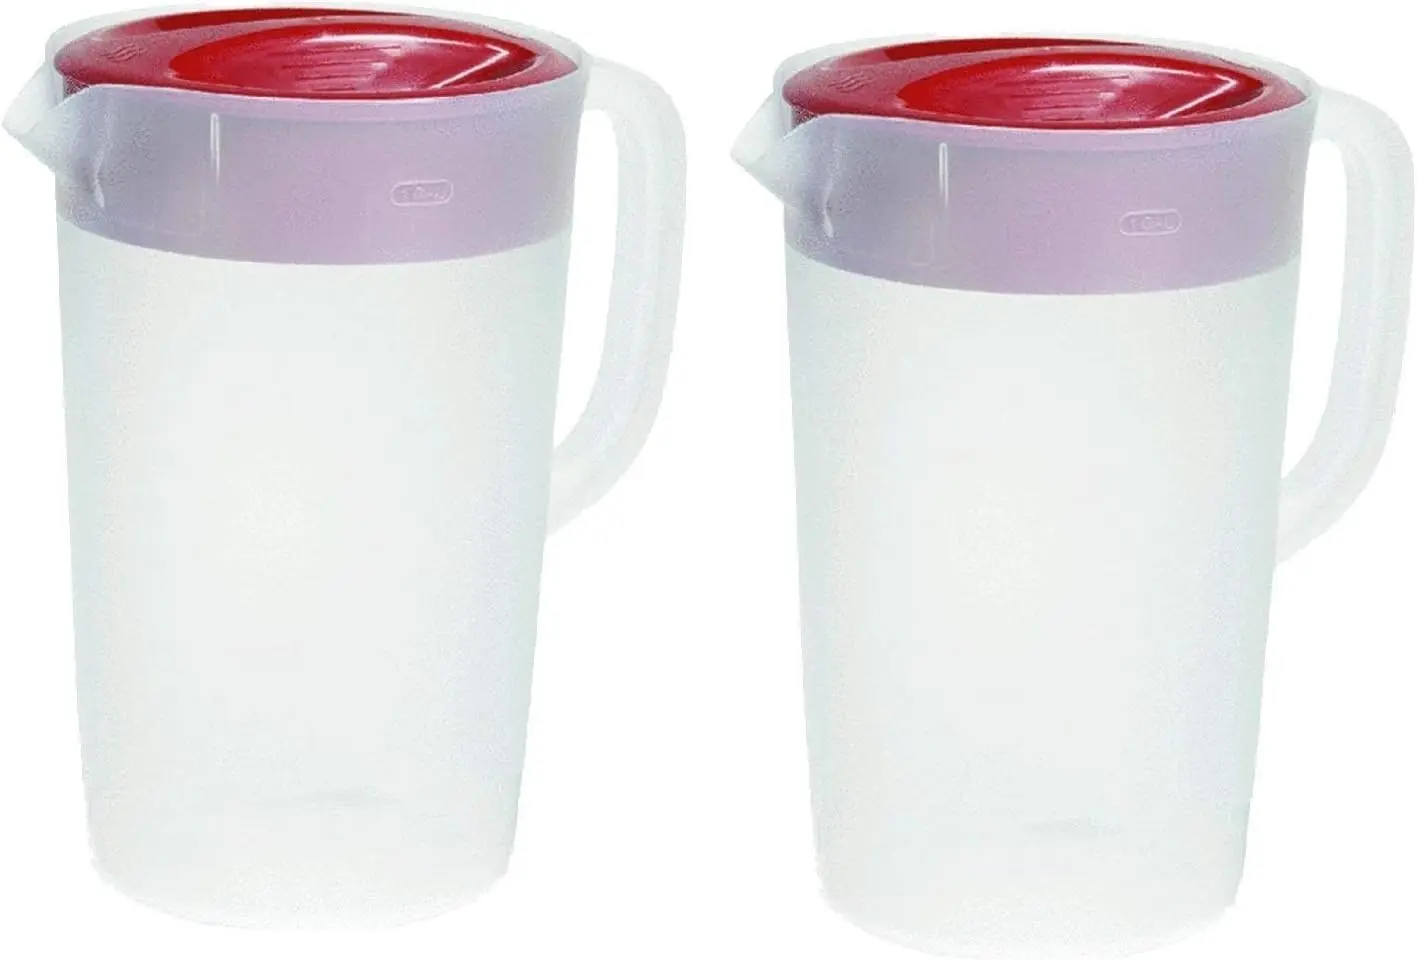 

Gallon Servin' Saver Pitcher (Set of 2), 1, Red Espresso measuring cup Turkish coffee pot Milk mocha Milk pitcher Taza espumador